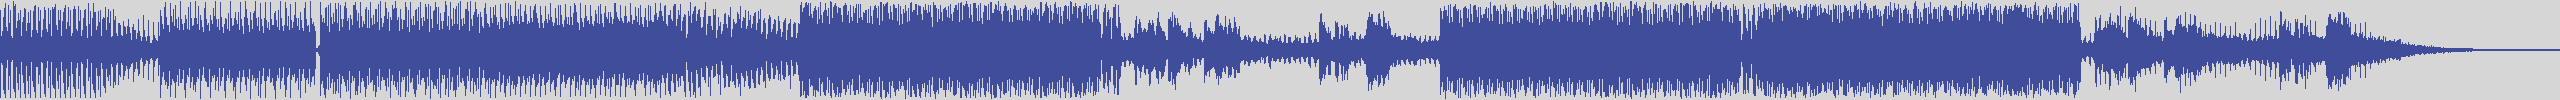 nf_boyz_records [NFY075] Mr. Ectectic - Kaspaka [Tech Organ Mix] audio wave form